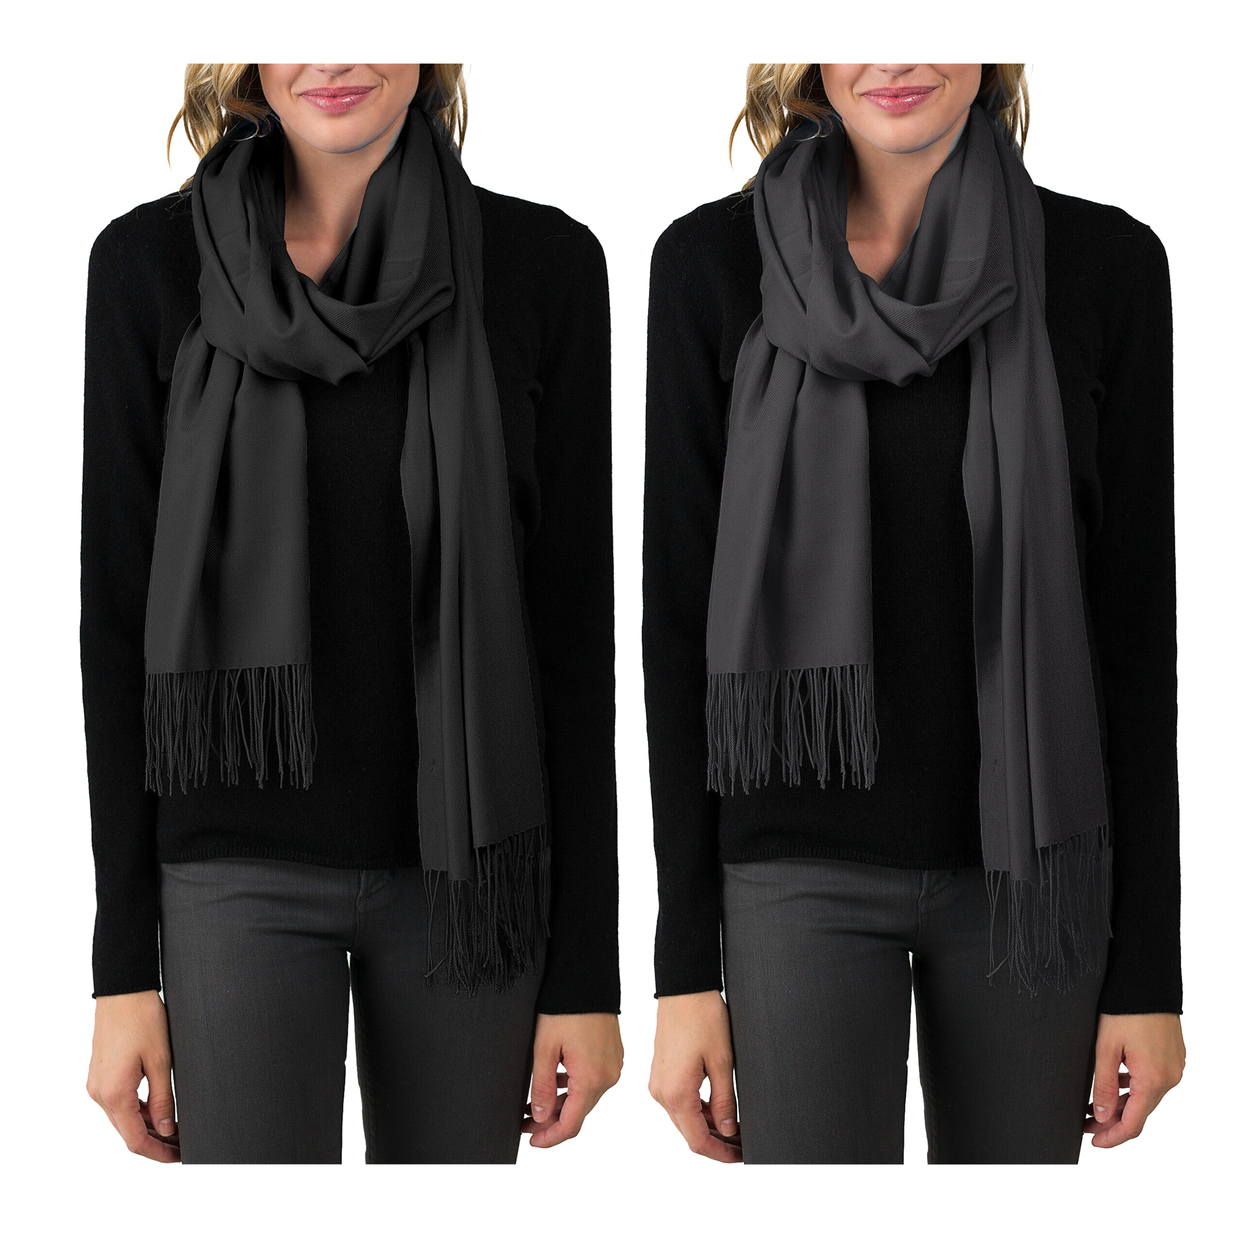 2-Pack: Women's Ultra Soft Cashmere Feel Winter Warm Scarfs - Black&Charcoal